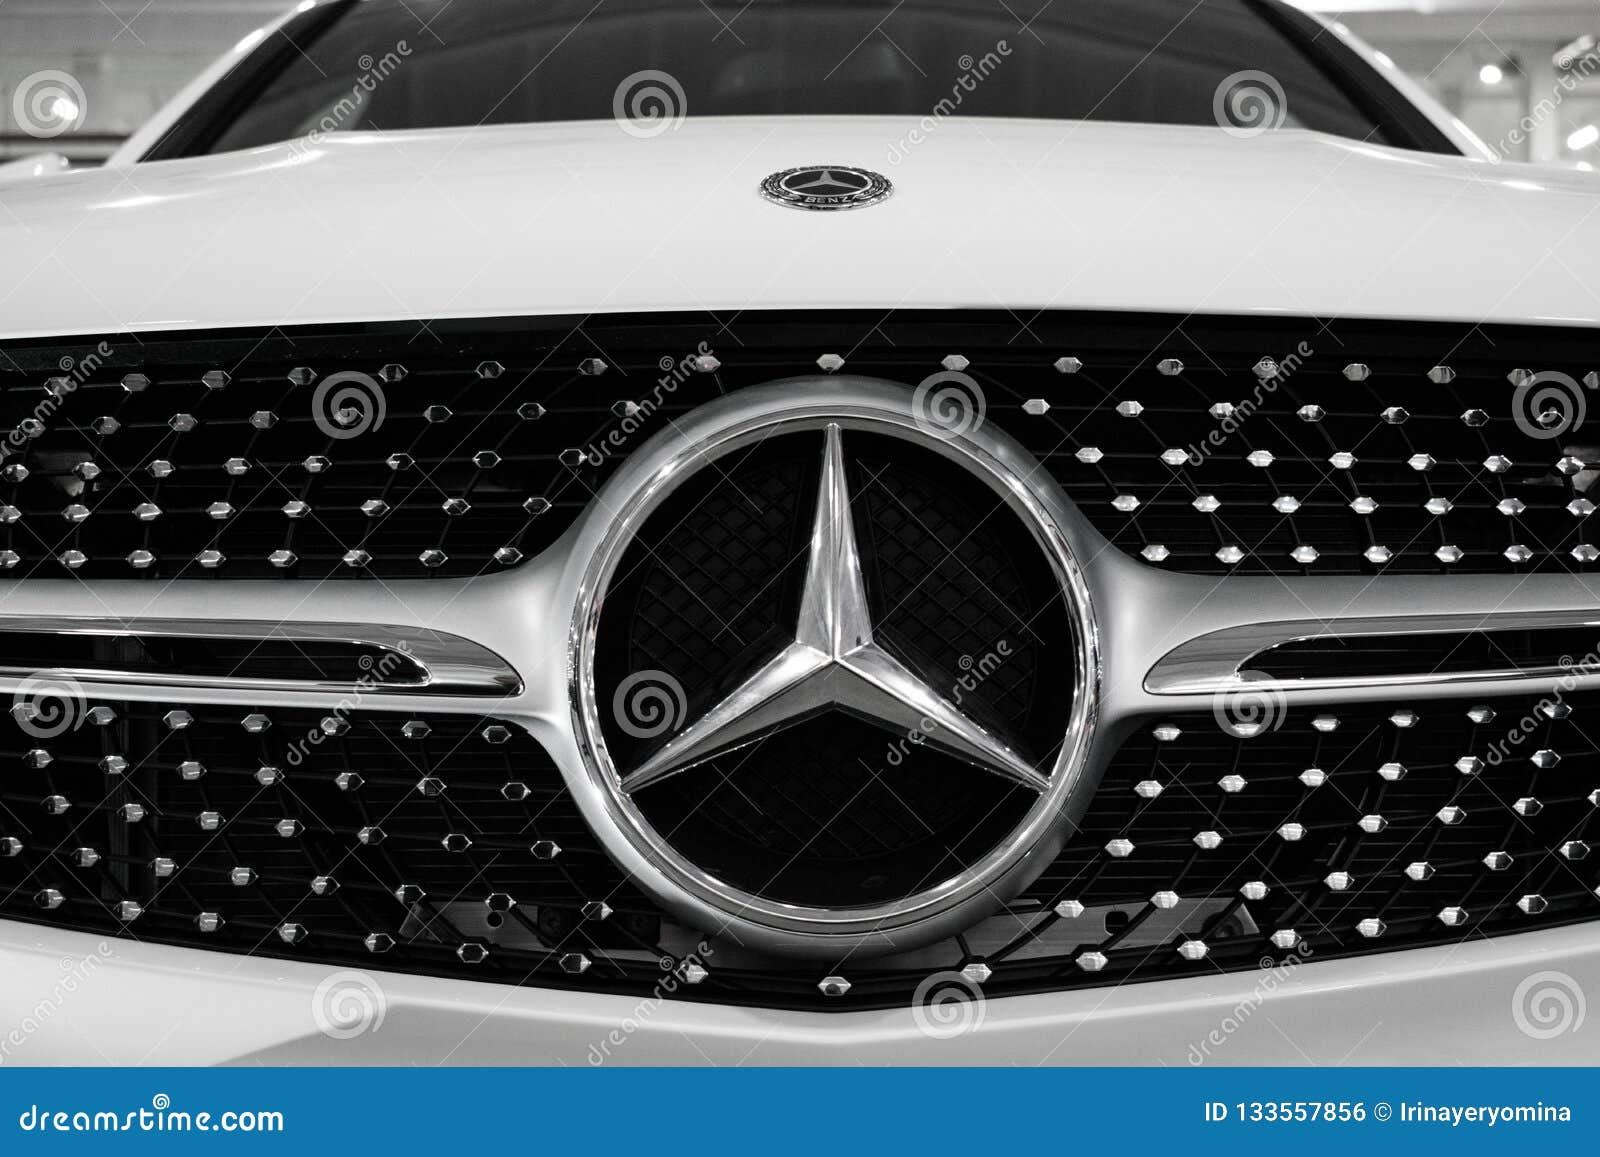 https://thumbs.dreamstime.com/z/close-up-mercedes-benz-logo-close-up-mercedes-benz-logo-badge-radiator-grille-new-car-motor-show-automobile-salon-133557856.jpg